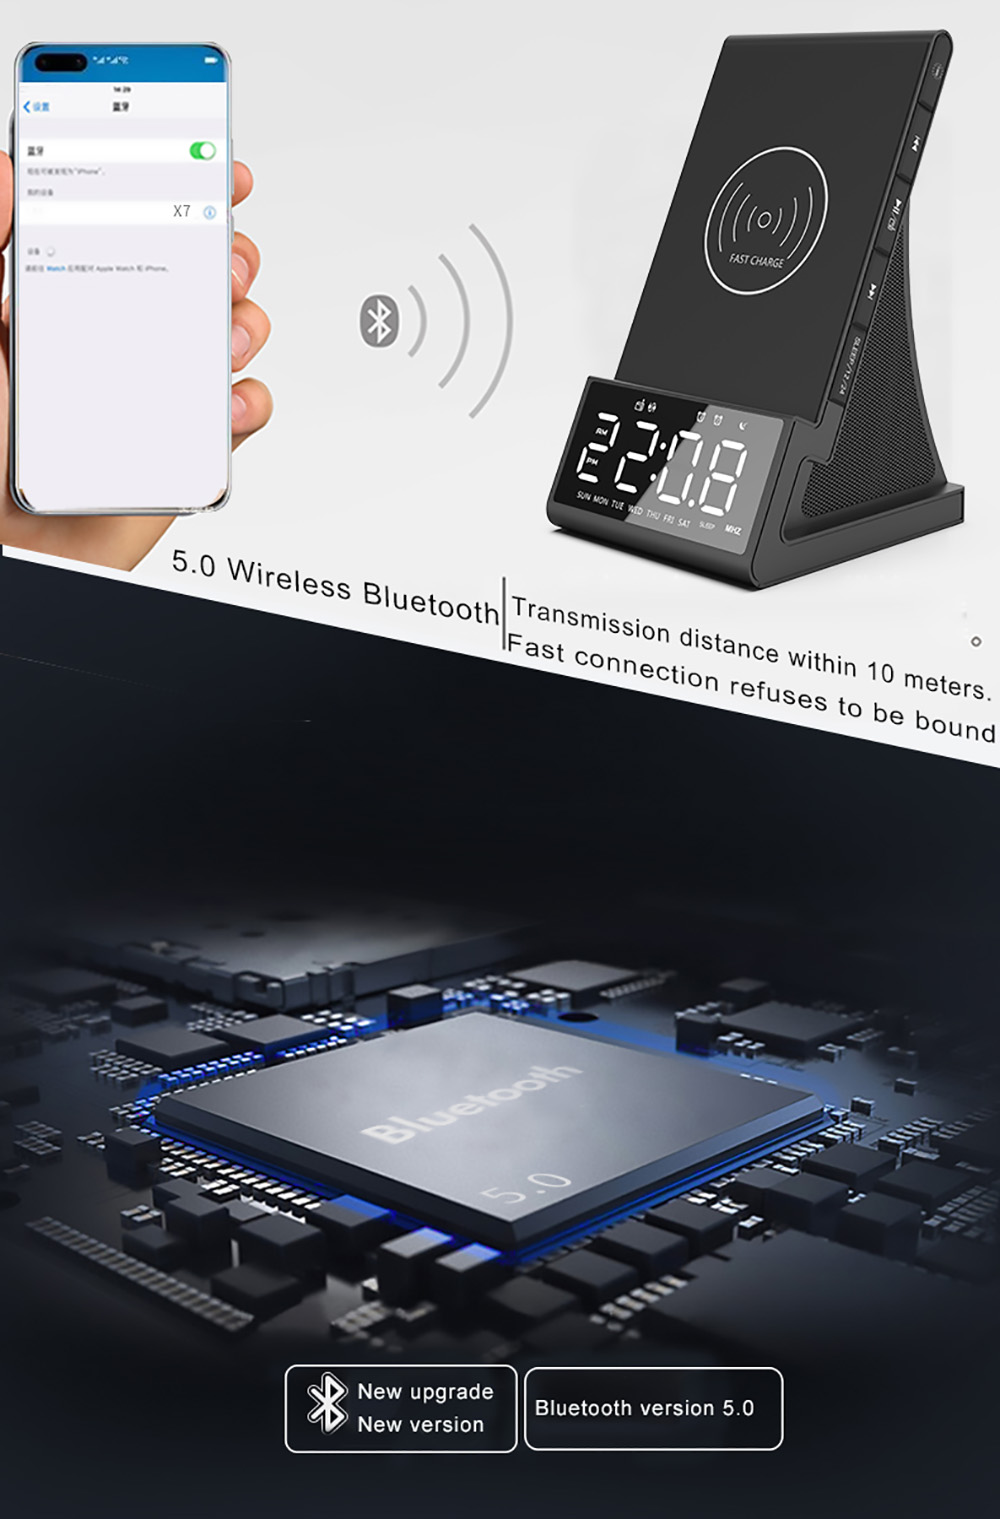 GREEN TIME X7 Wireless Fast Charger Alarm Clock Radio, LED Smart Digital Desktop, Subwoofer Bluetooth Speaker - EU Plug